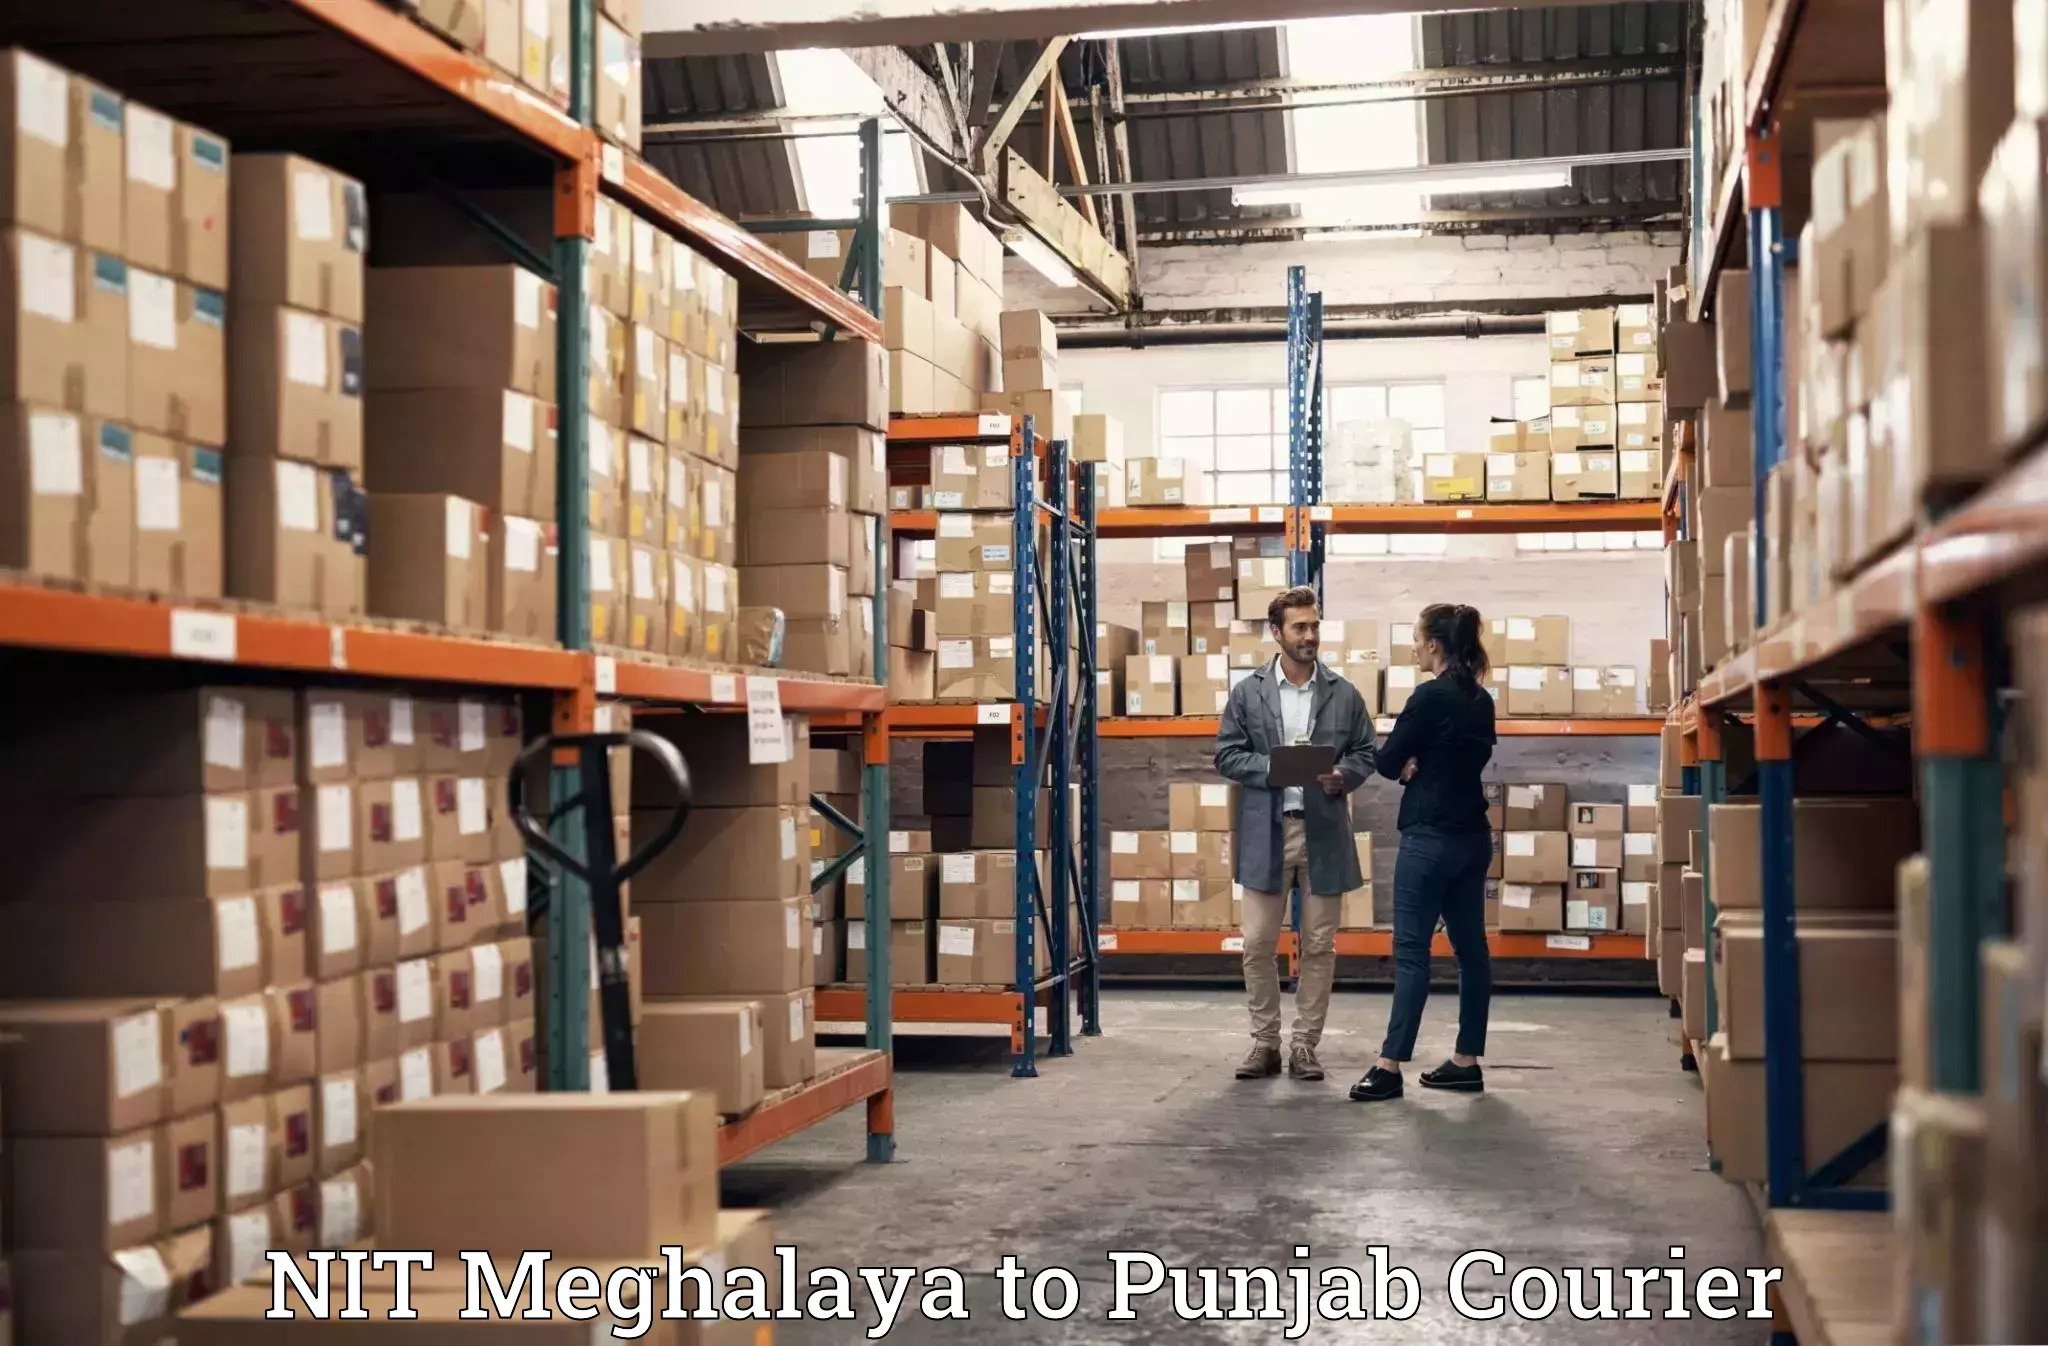 Professional moving company in NIT Meghalaya to Dhilwan